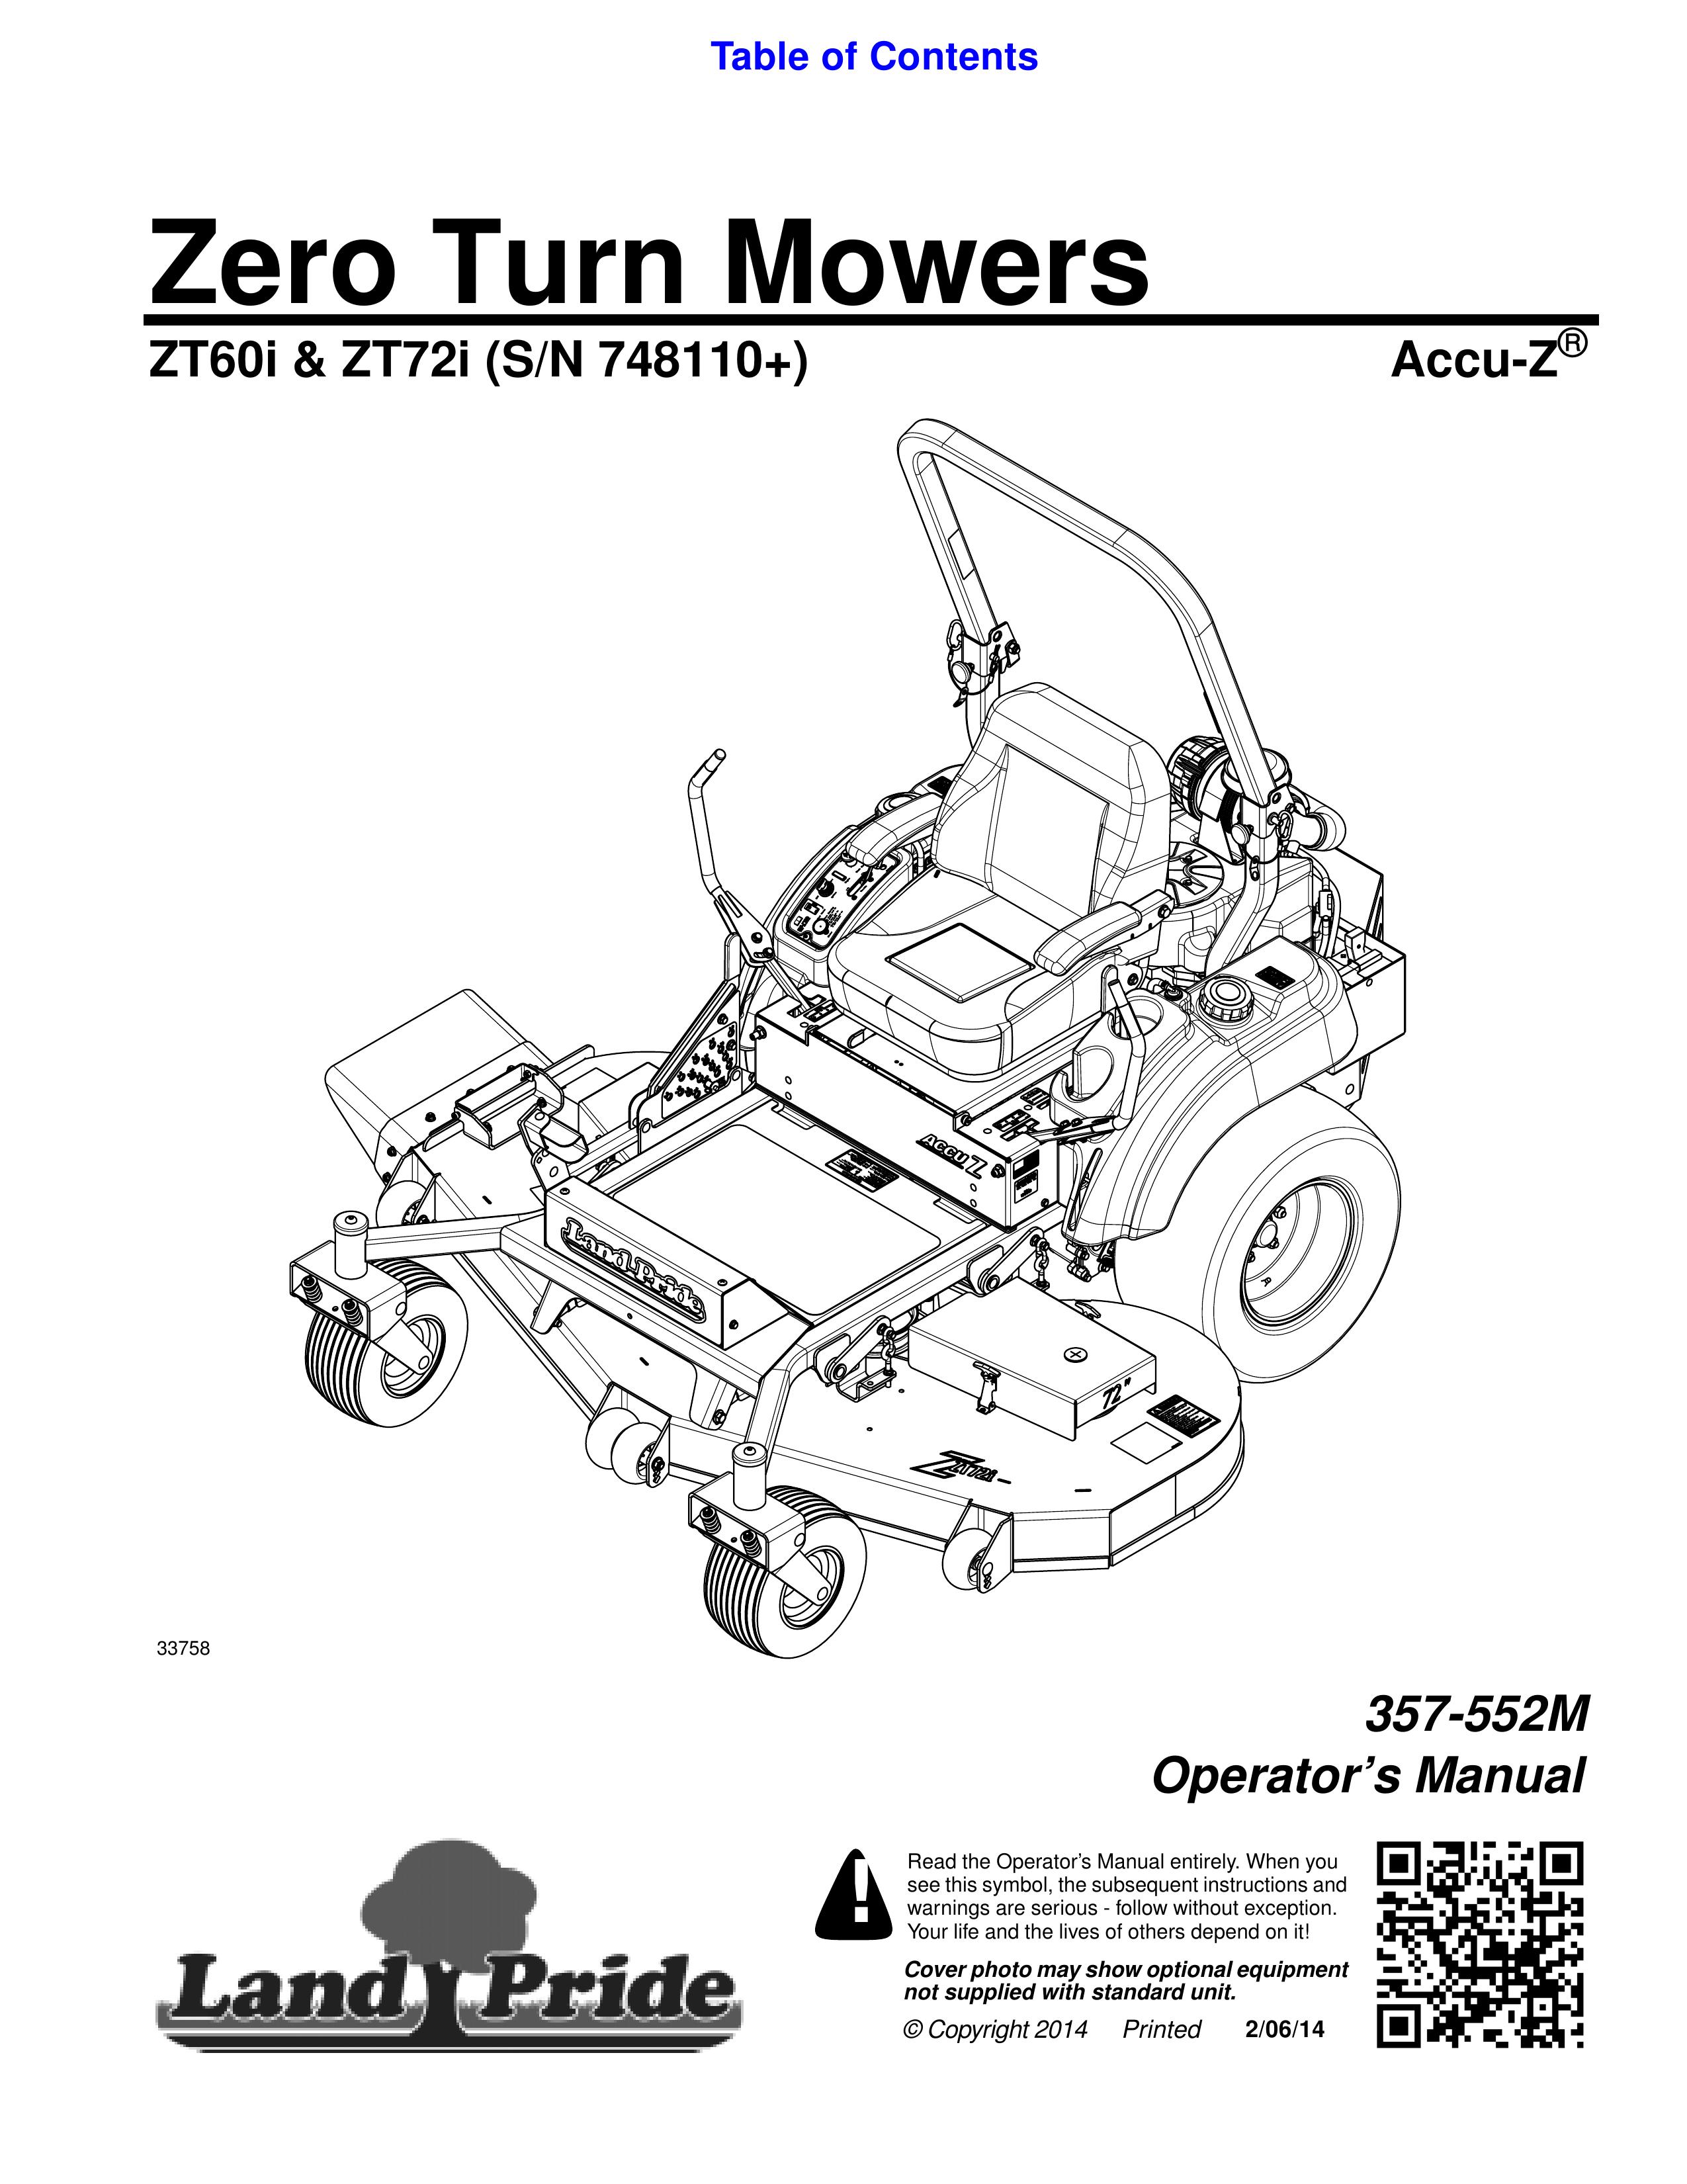 Land Pride 357-552M Lawn Mower User Manual